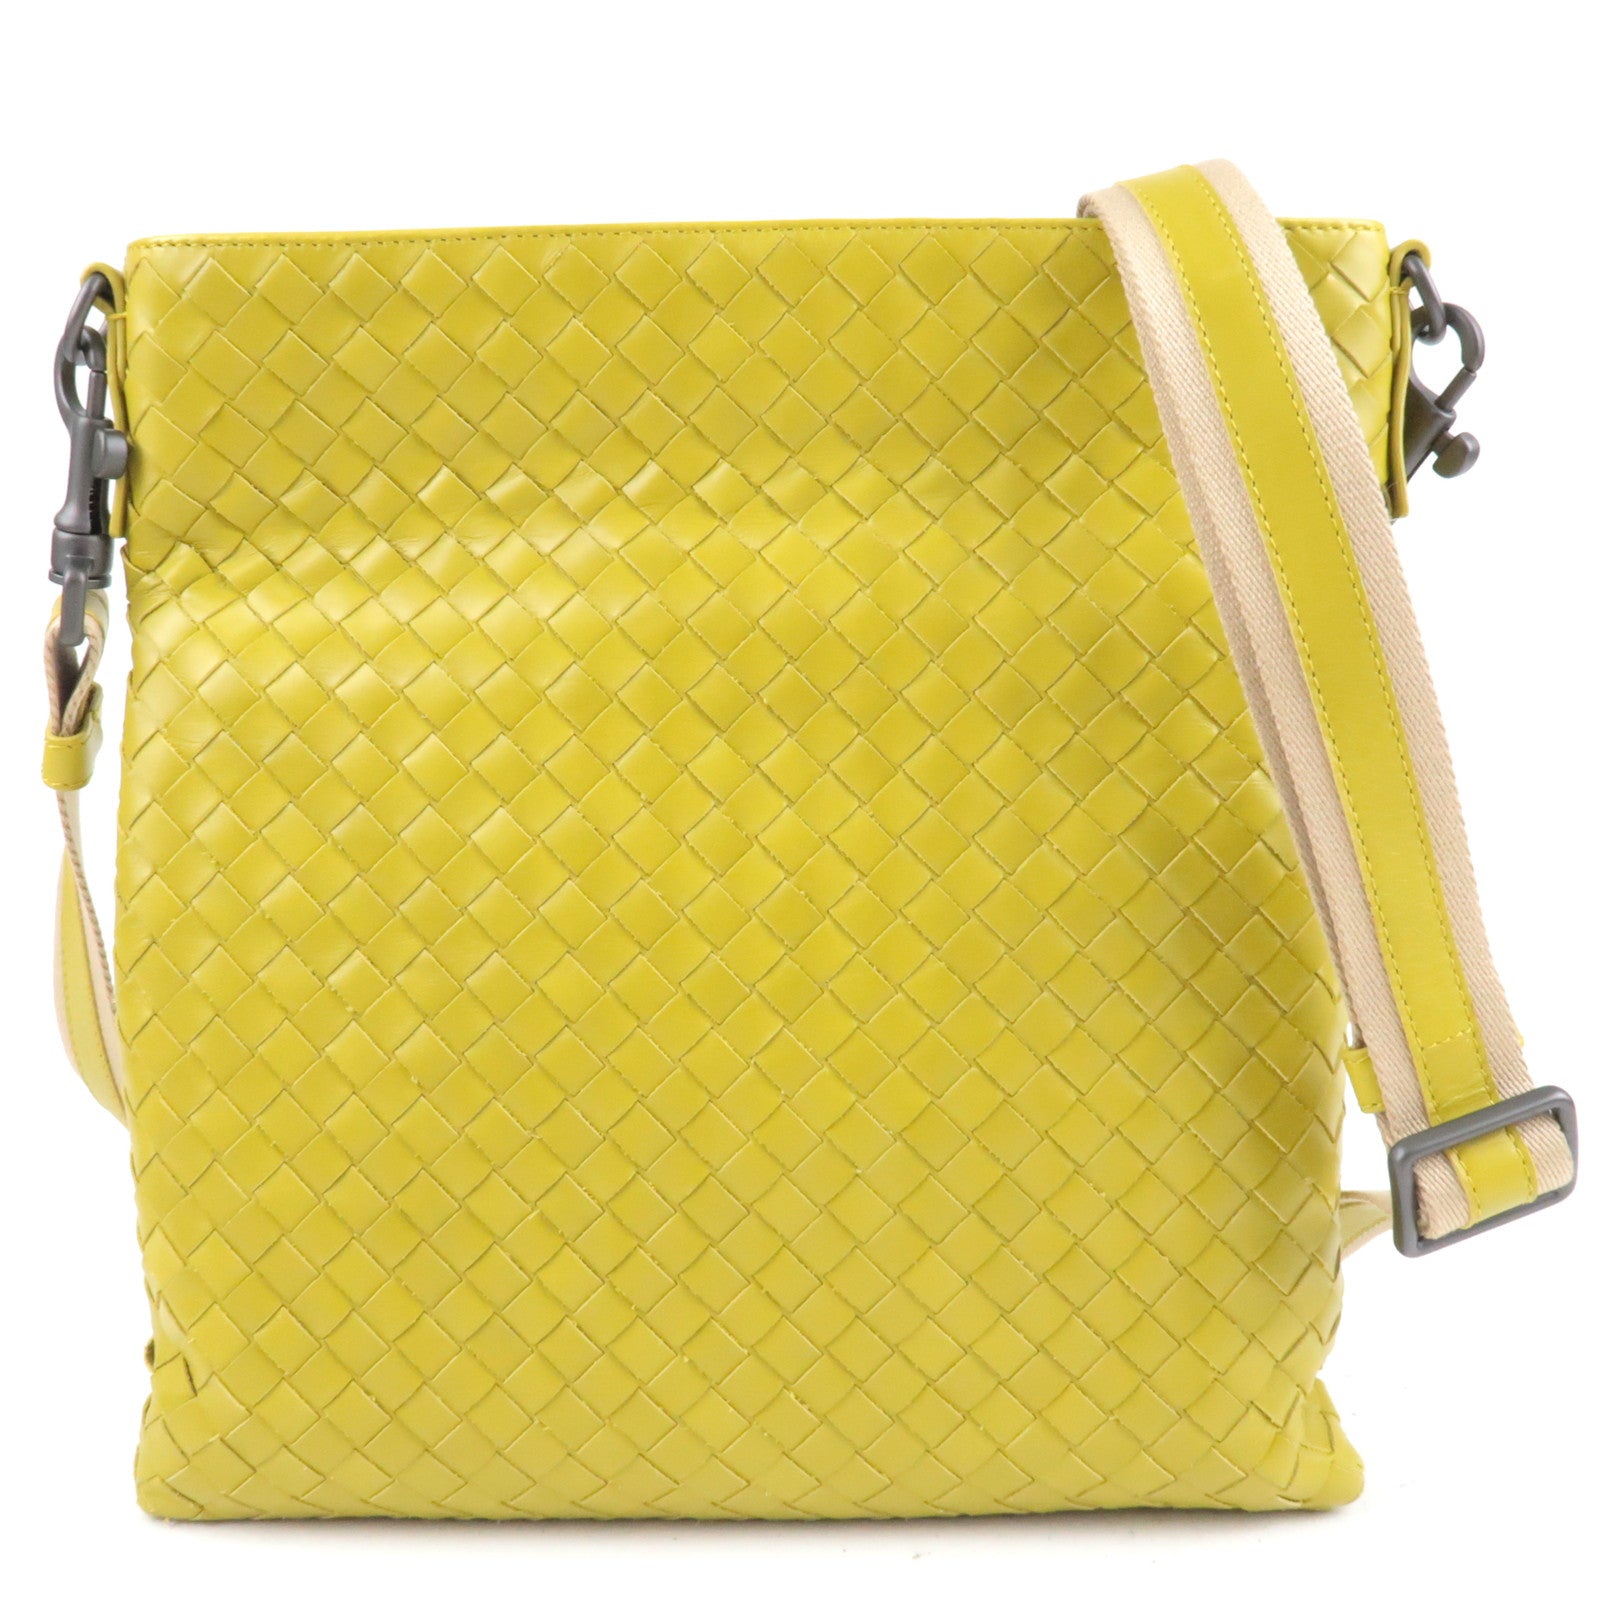 BOTTEGA-VENETA-Intrecciato-Leather-Shoulder-Bag-Yellow-Green